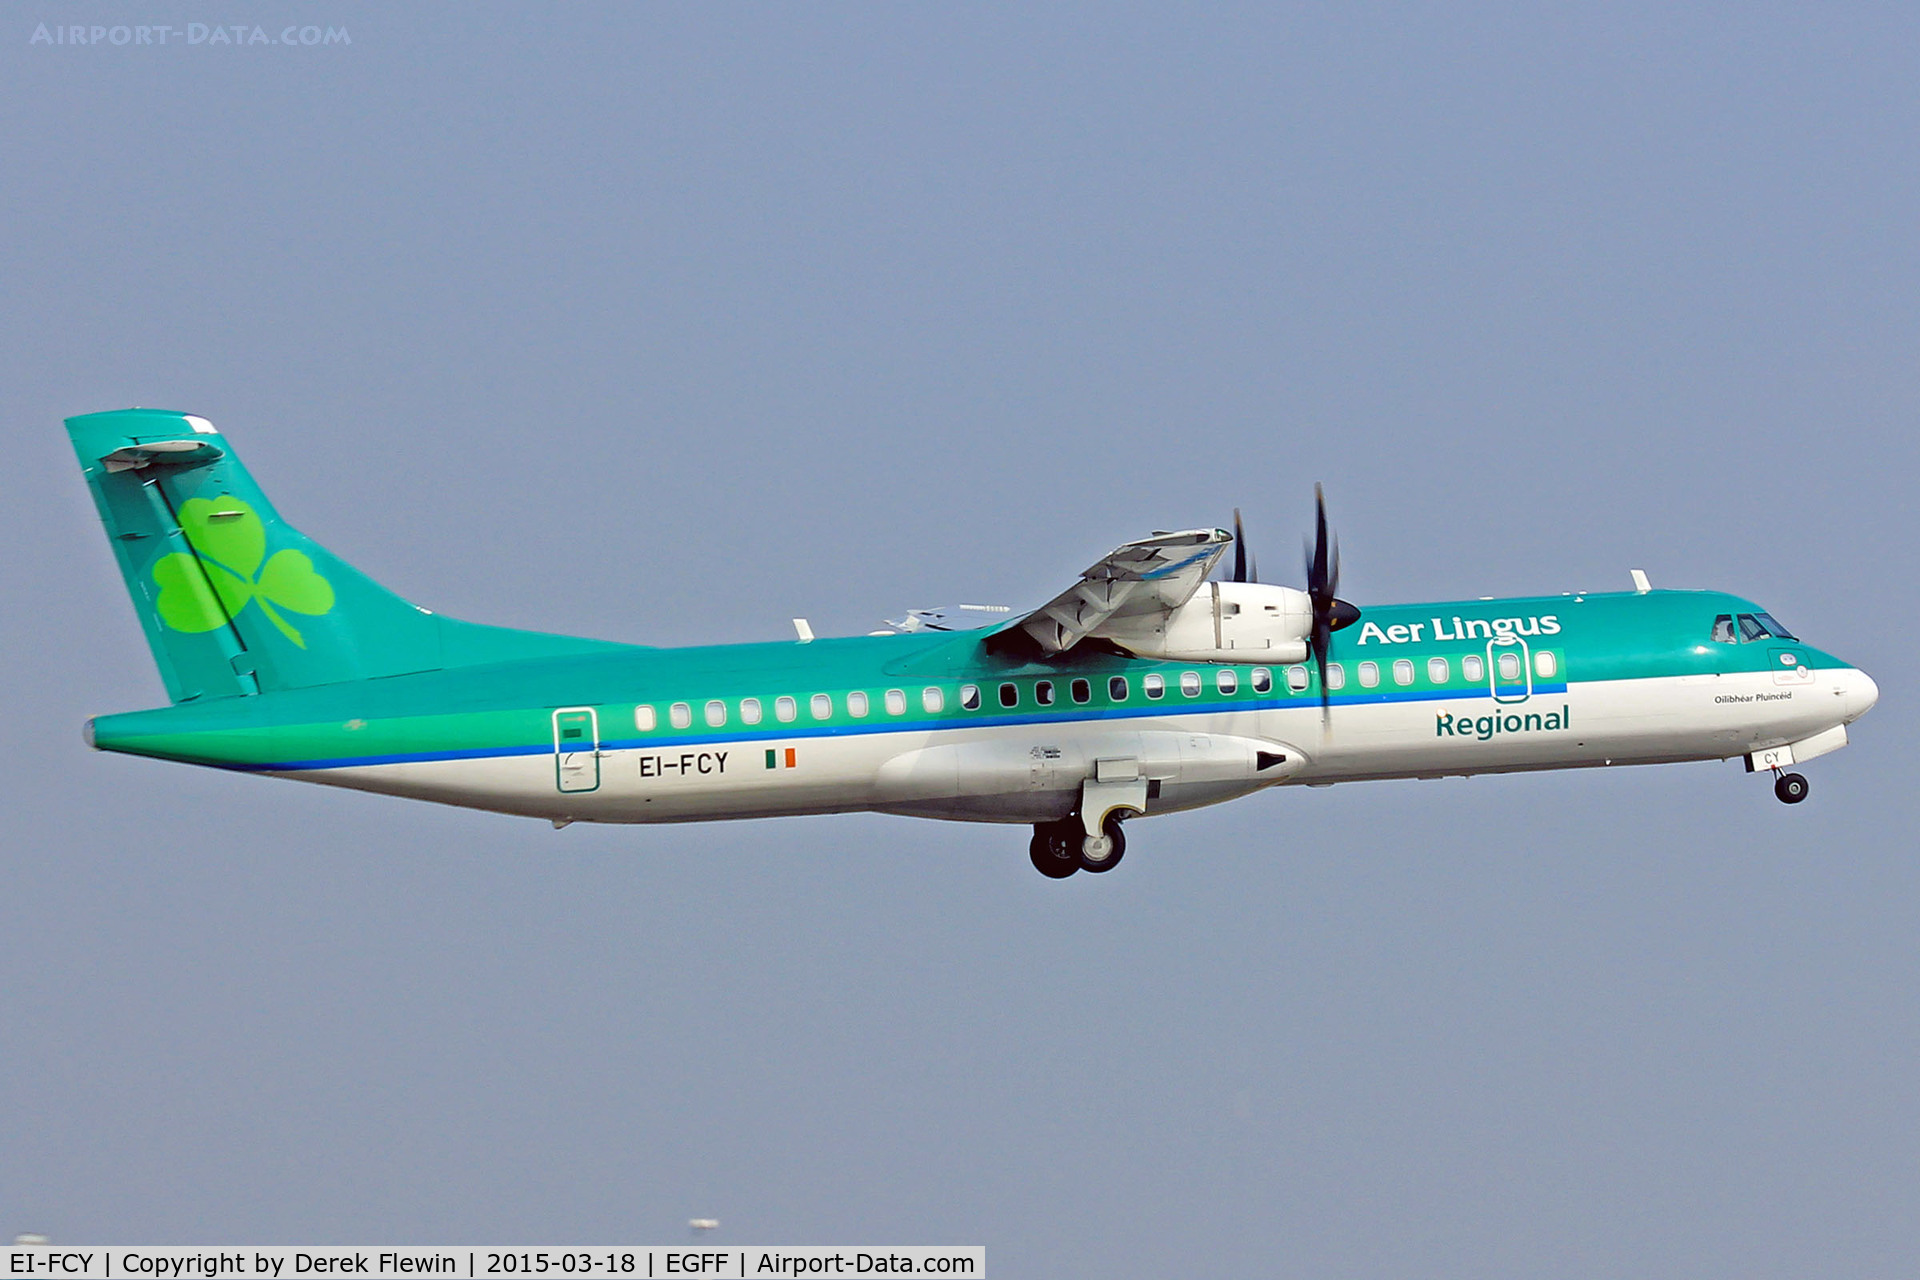 EI-FCY, 2014 ATR 72-600 (72-212A) C/N 1139, ATR 72-600, Dublin based, previously F-WWEB, EI-FCY, callsign Stobart 91CW. seen departing runway 12 enroute to Dublin.